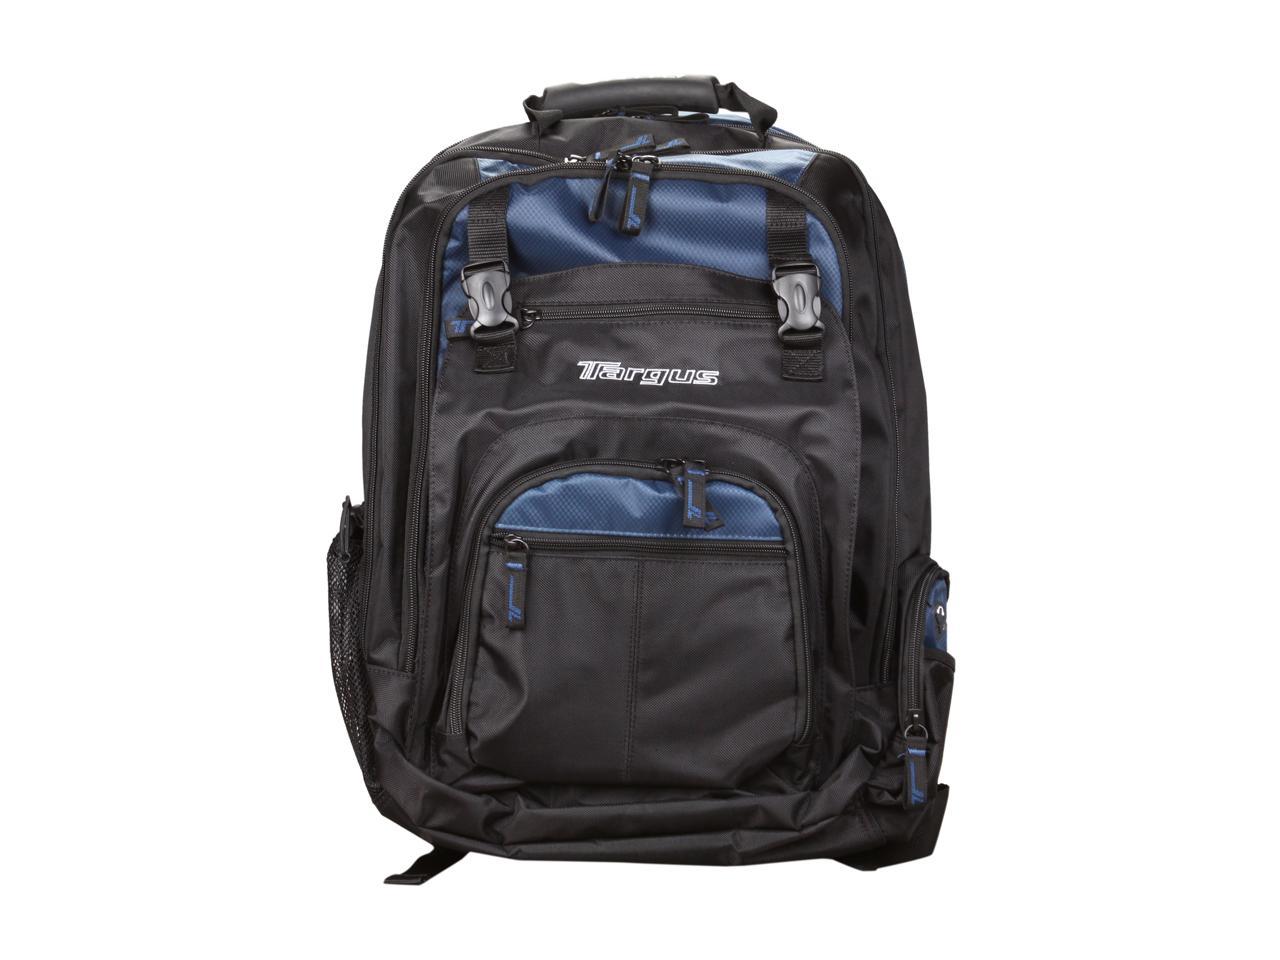 Targus 17" XL Backpack - TXL617 - Newegg.com